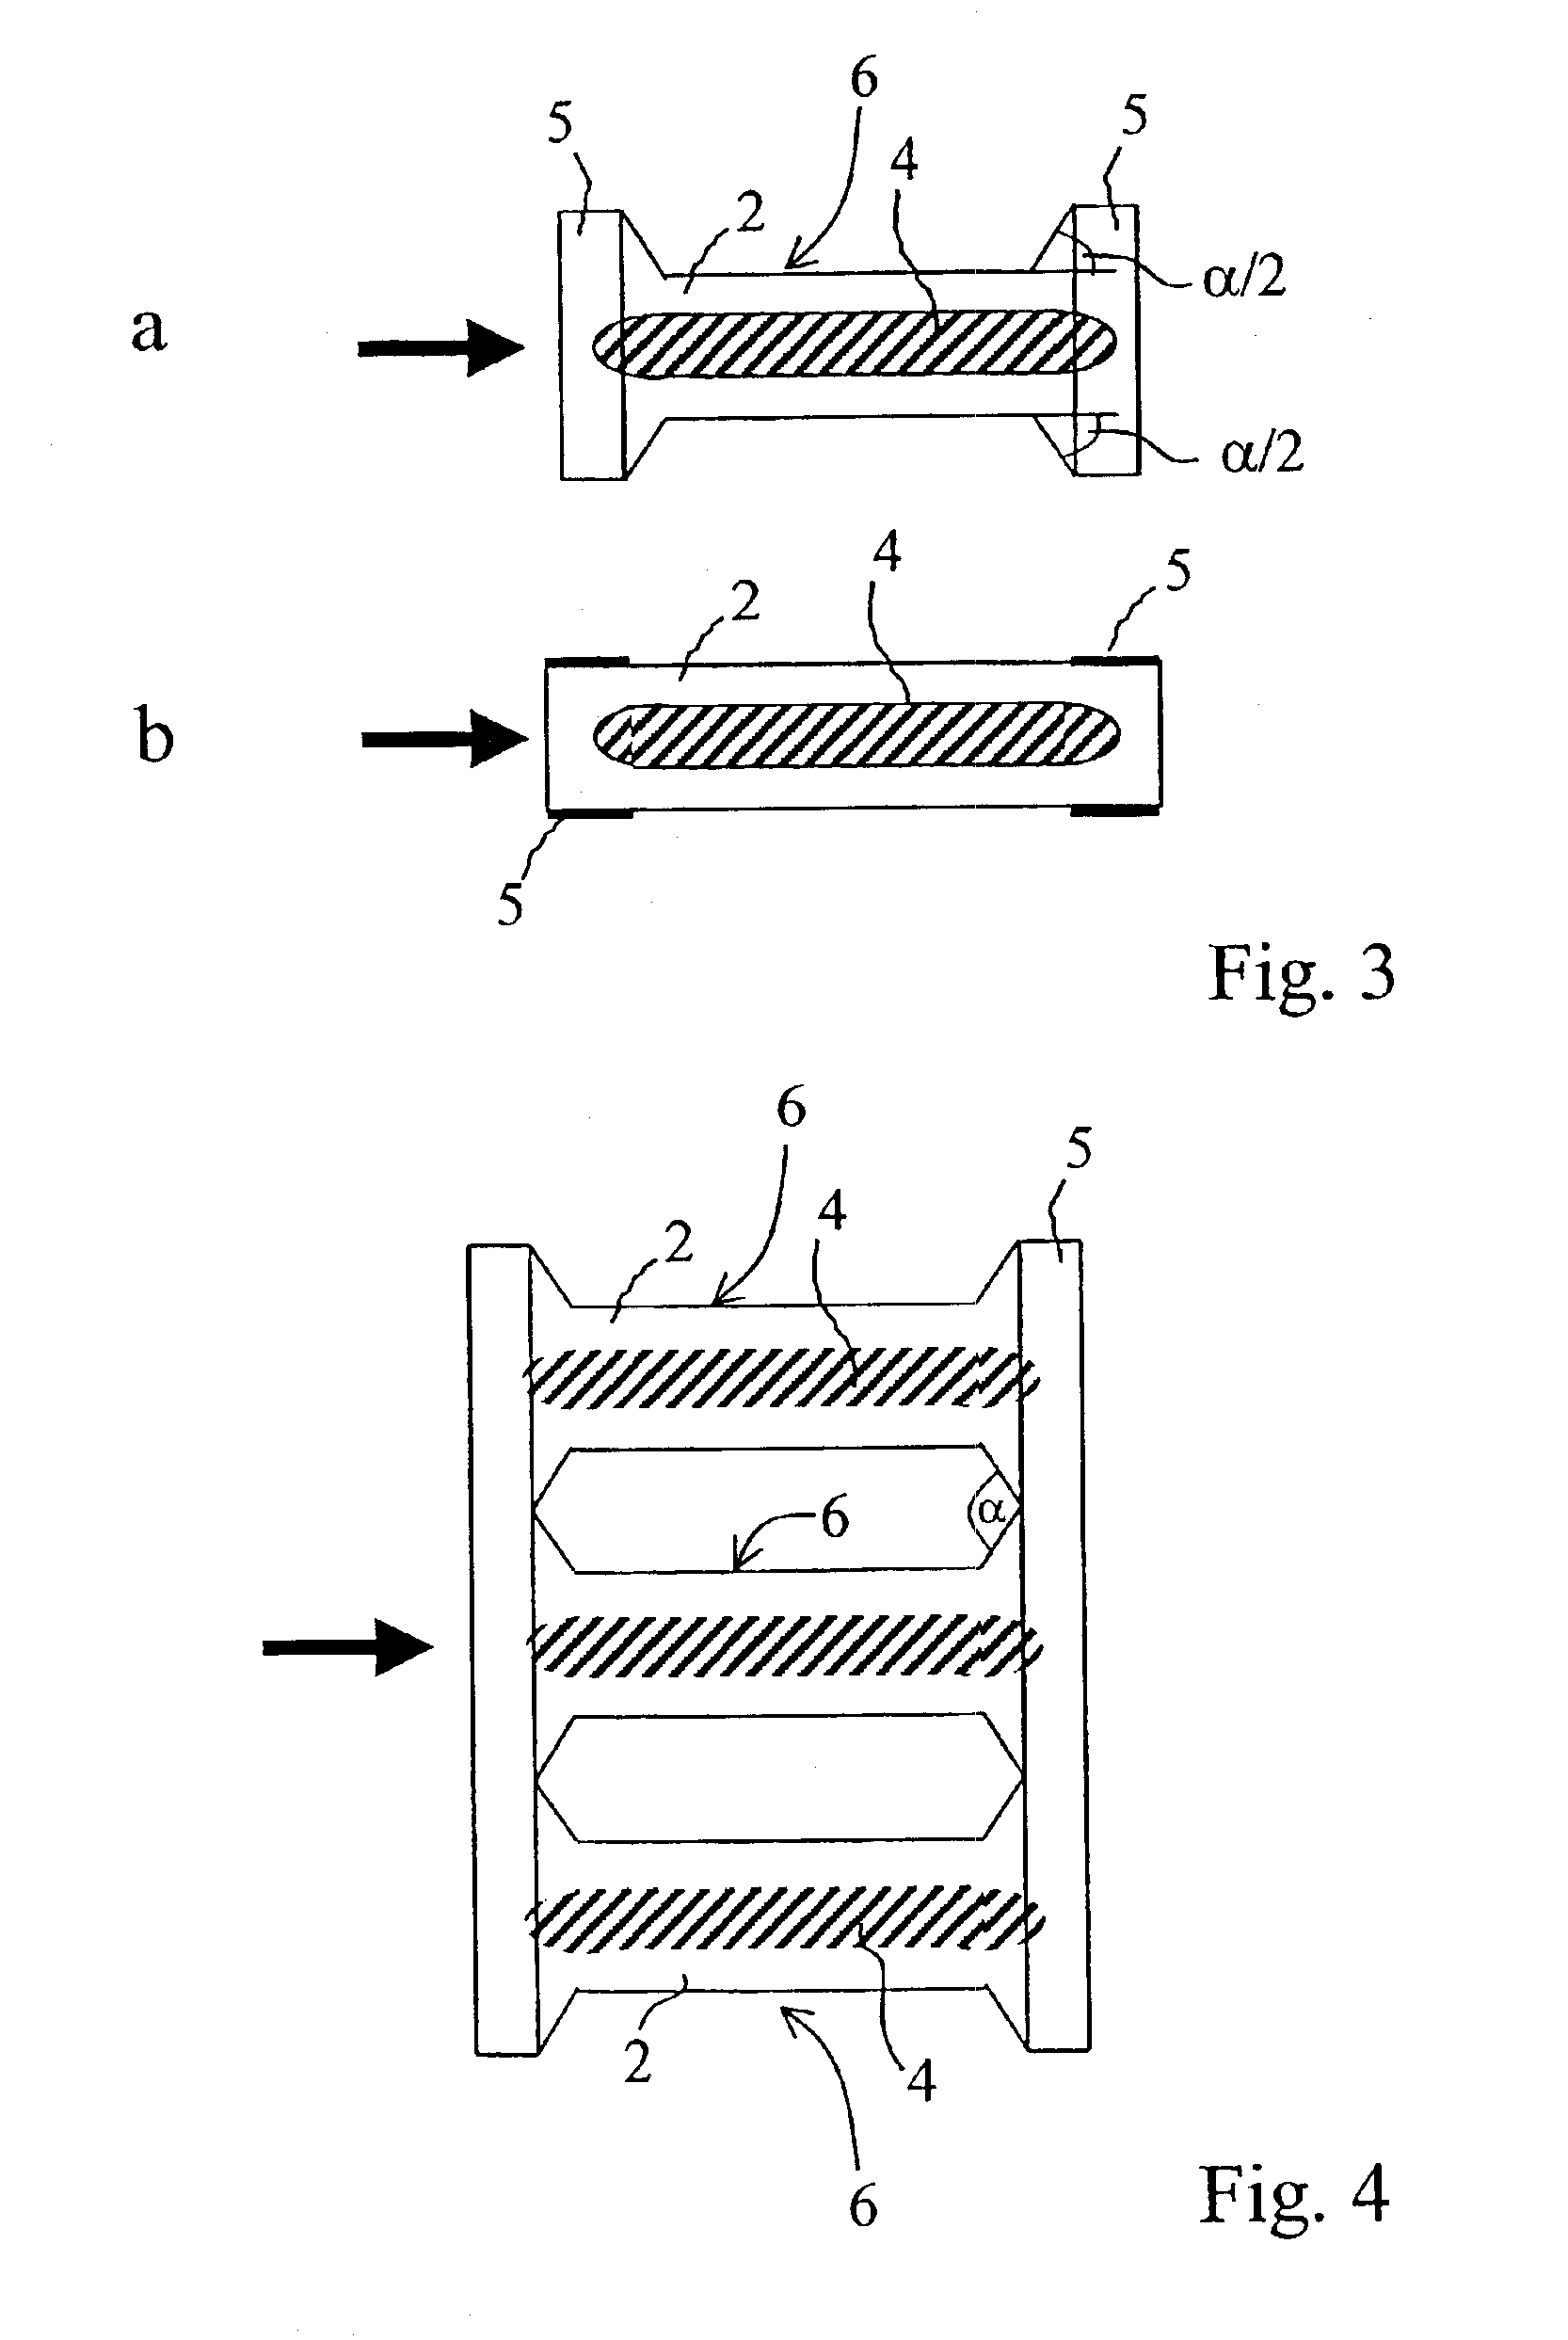 Method of producing a PTC-resistor device